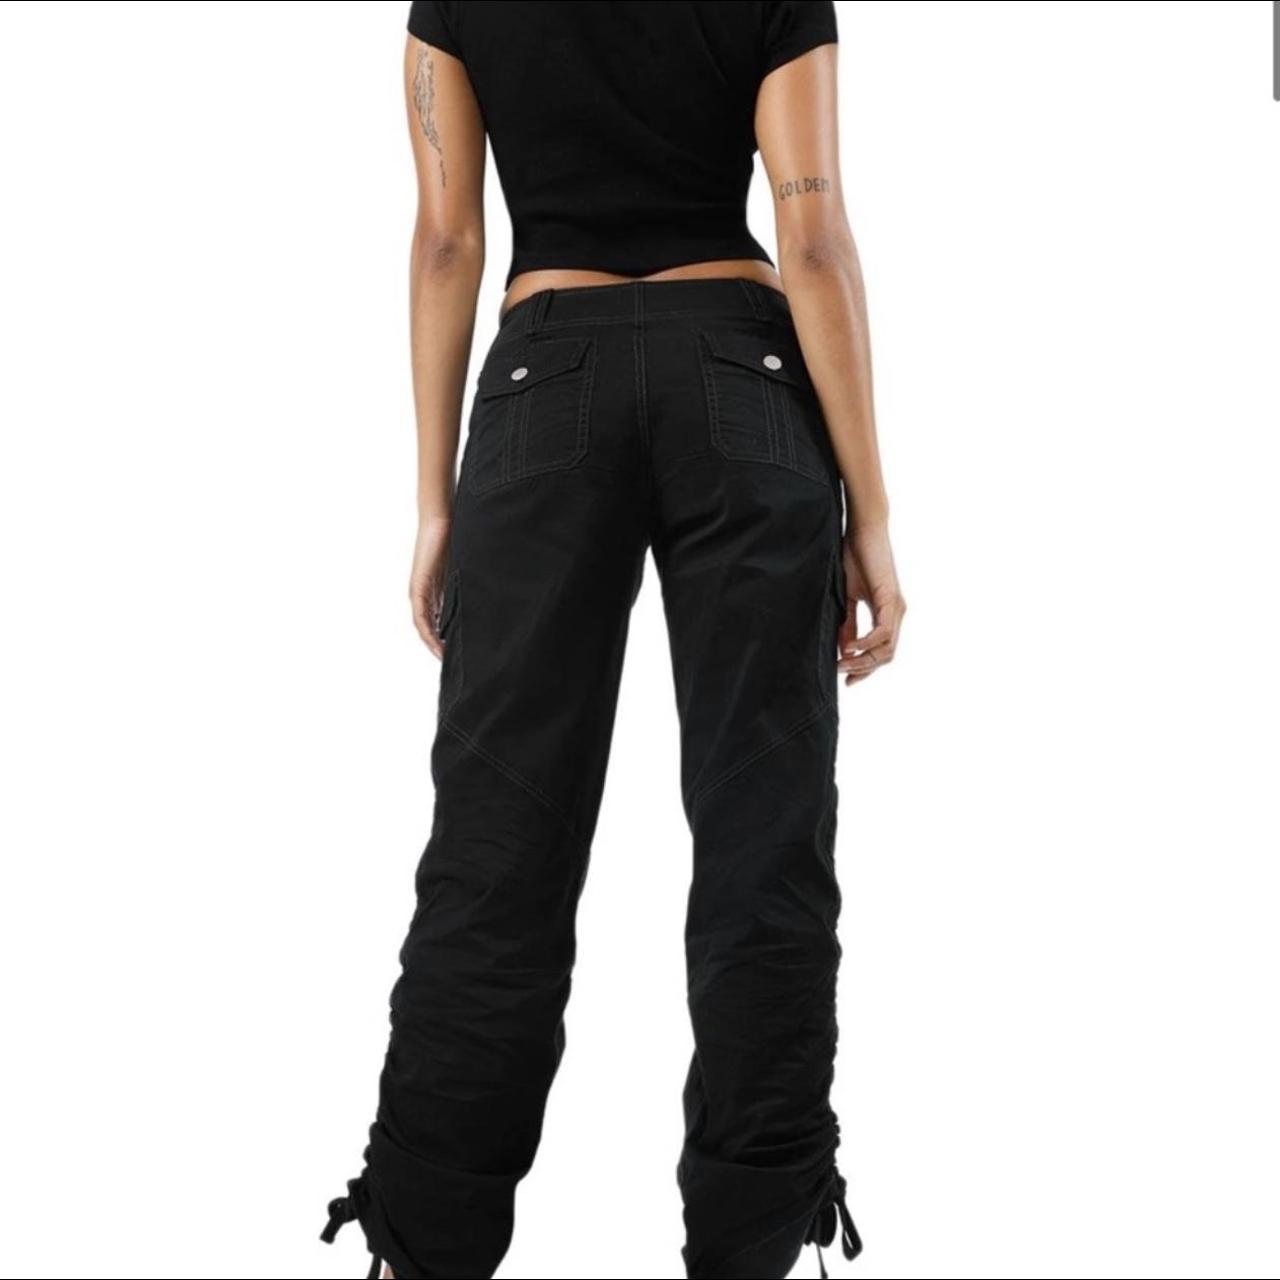 I.AM.GIA ryder cargo pants , -Black, -size xxs, -worn